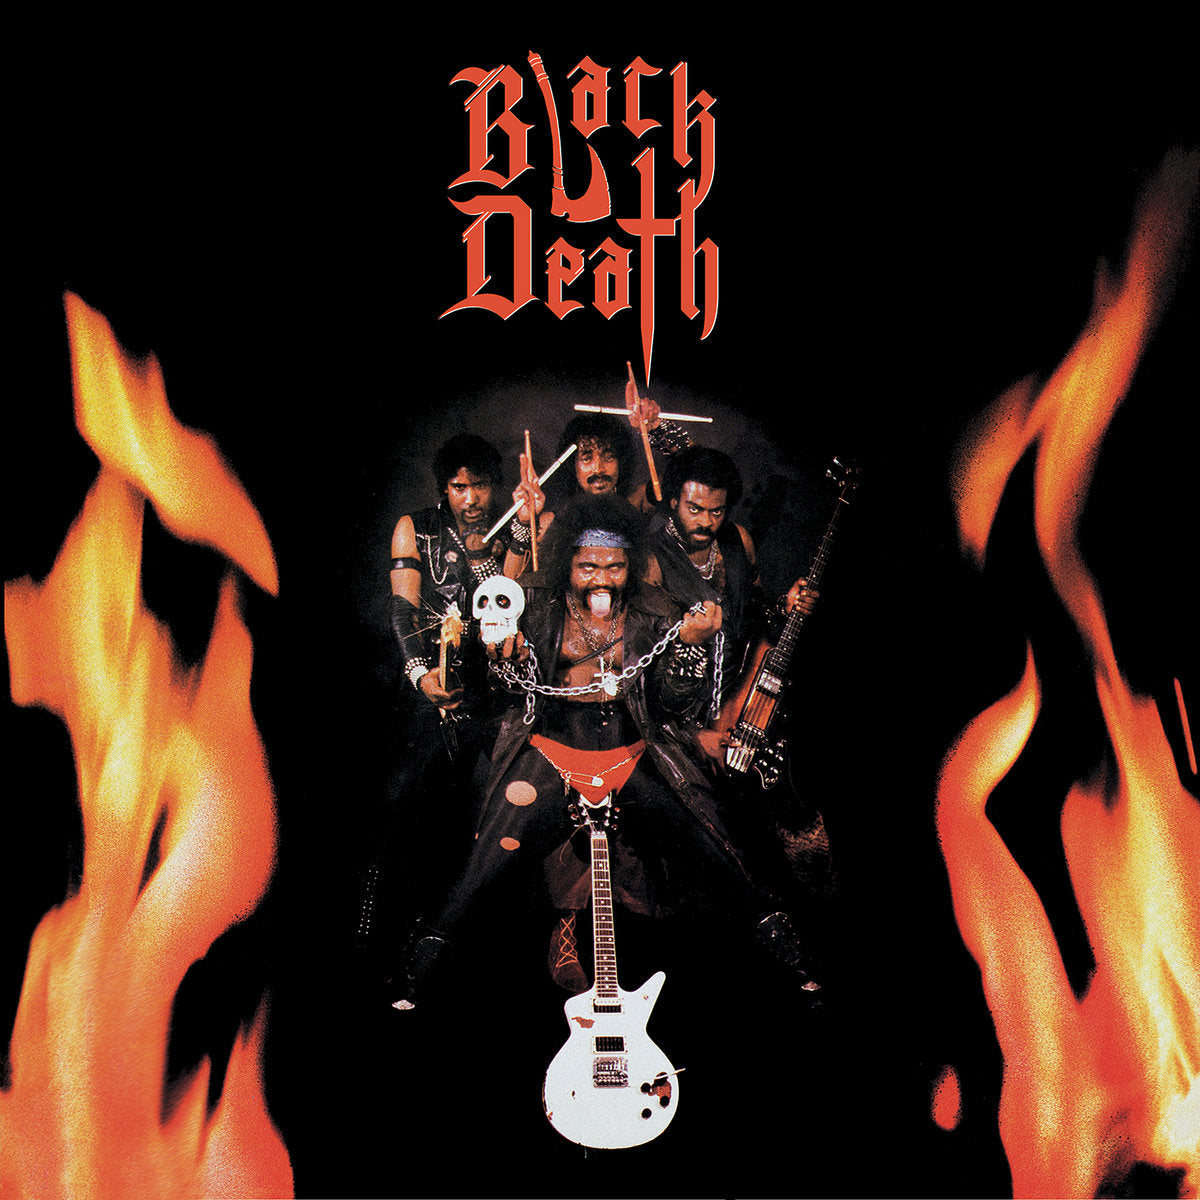 [SOLD OUT] BLACK DEATH "Black Death" vinyl LP + 7" (gatefold, w/ poster)